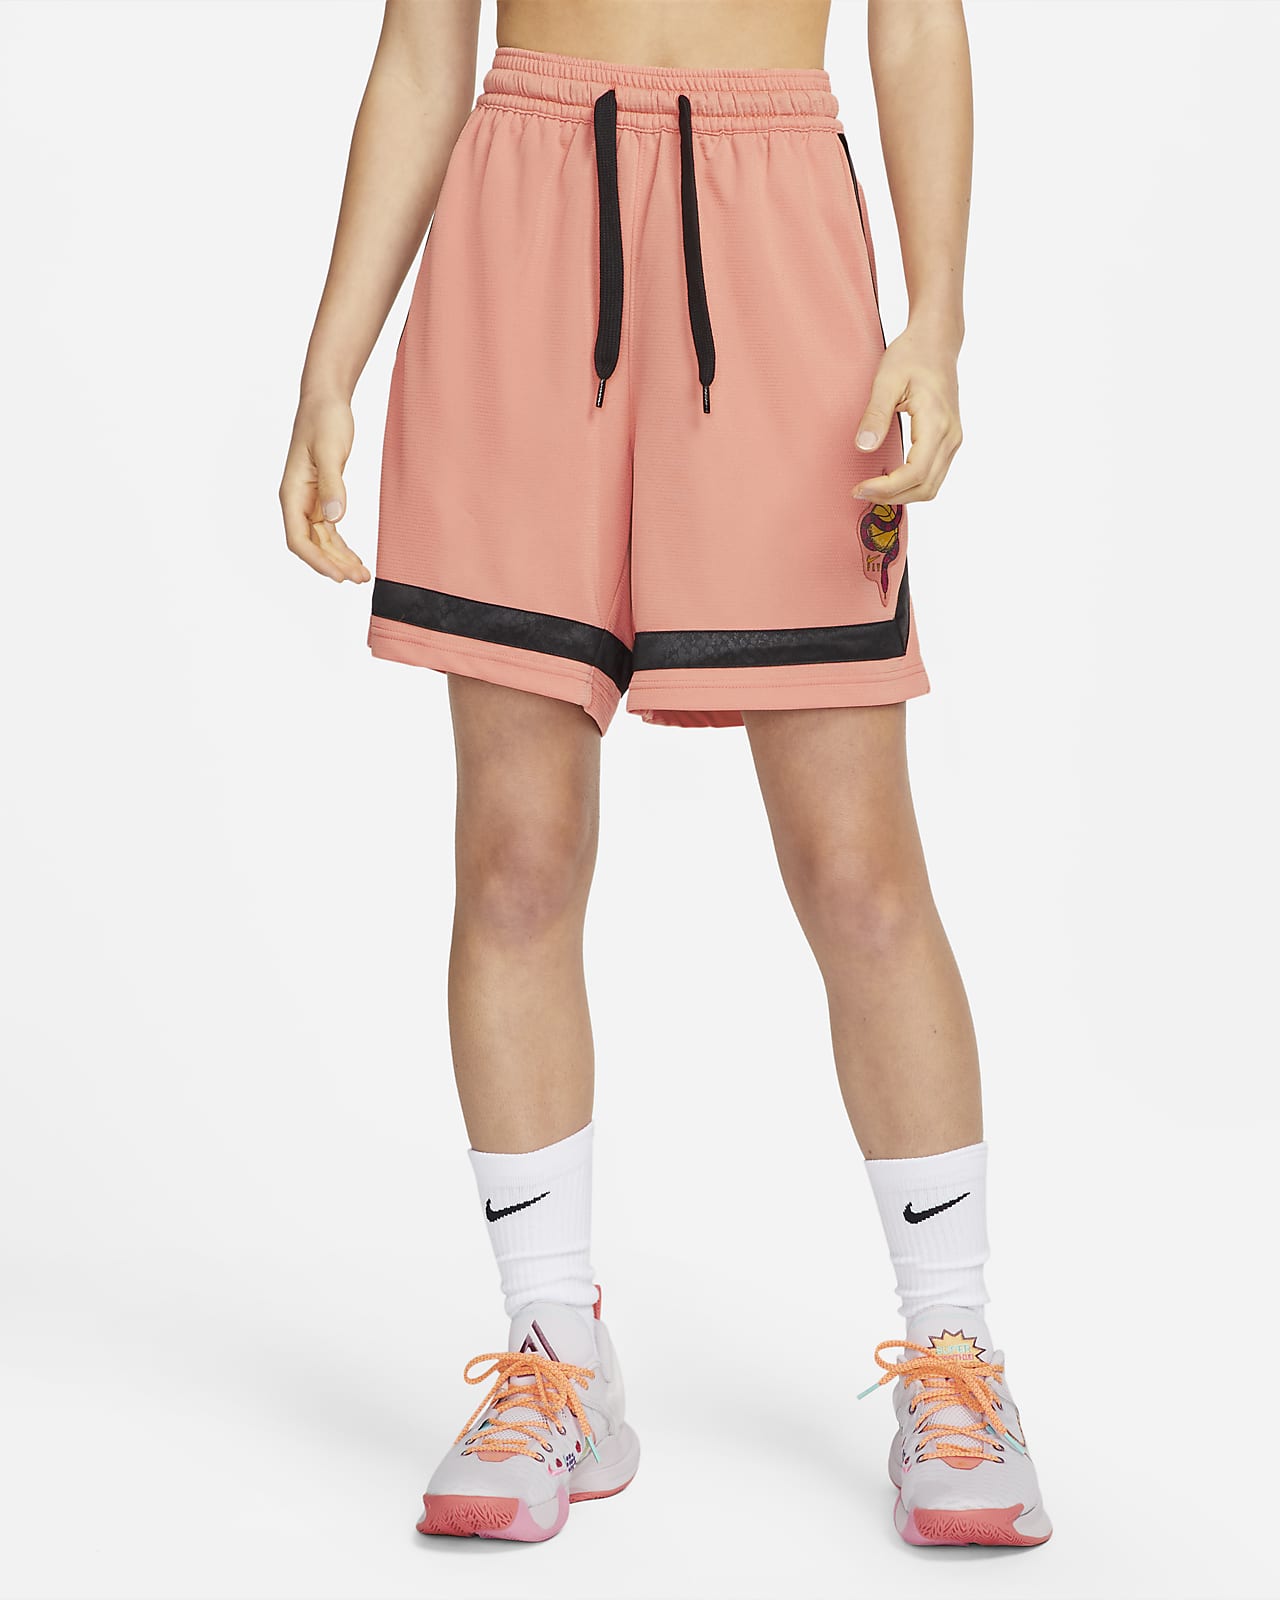 Shorts de básquetbol para mujer Nike Dri-FIT Fly Crossover. 